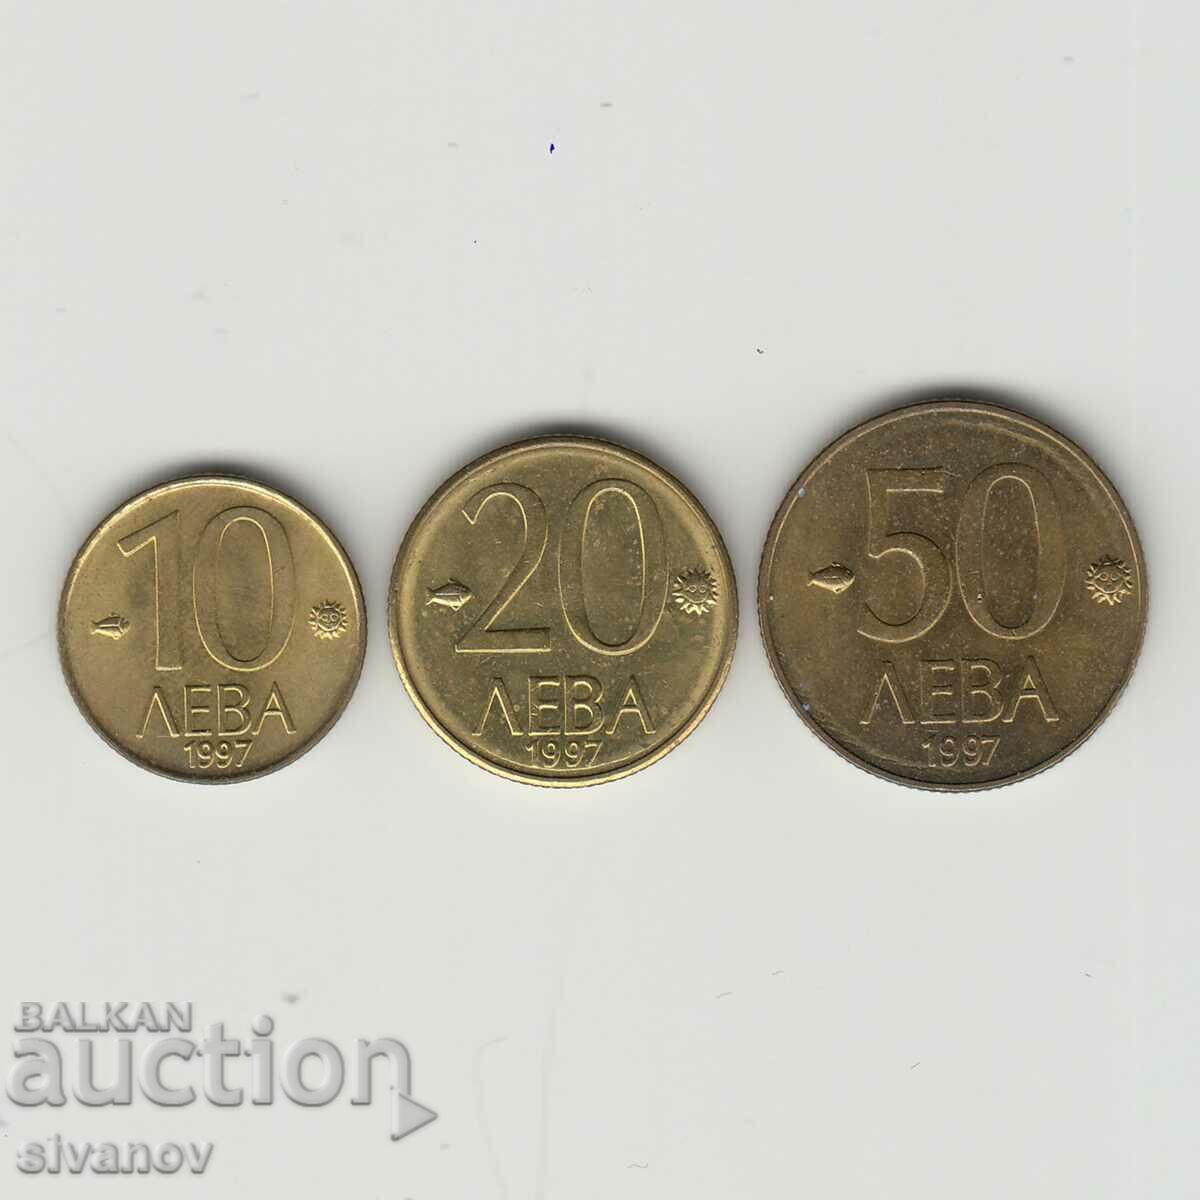 Bulgaria 10, 20, 50 leva 1997 set lot #5412